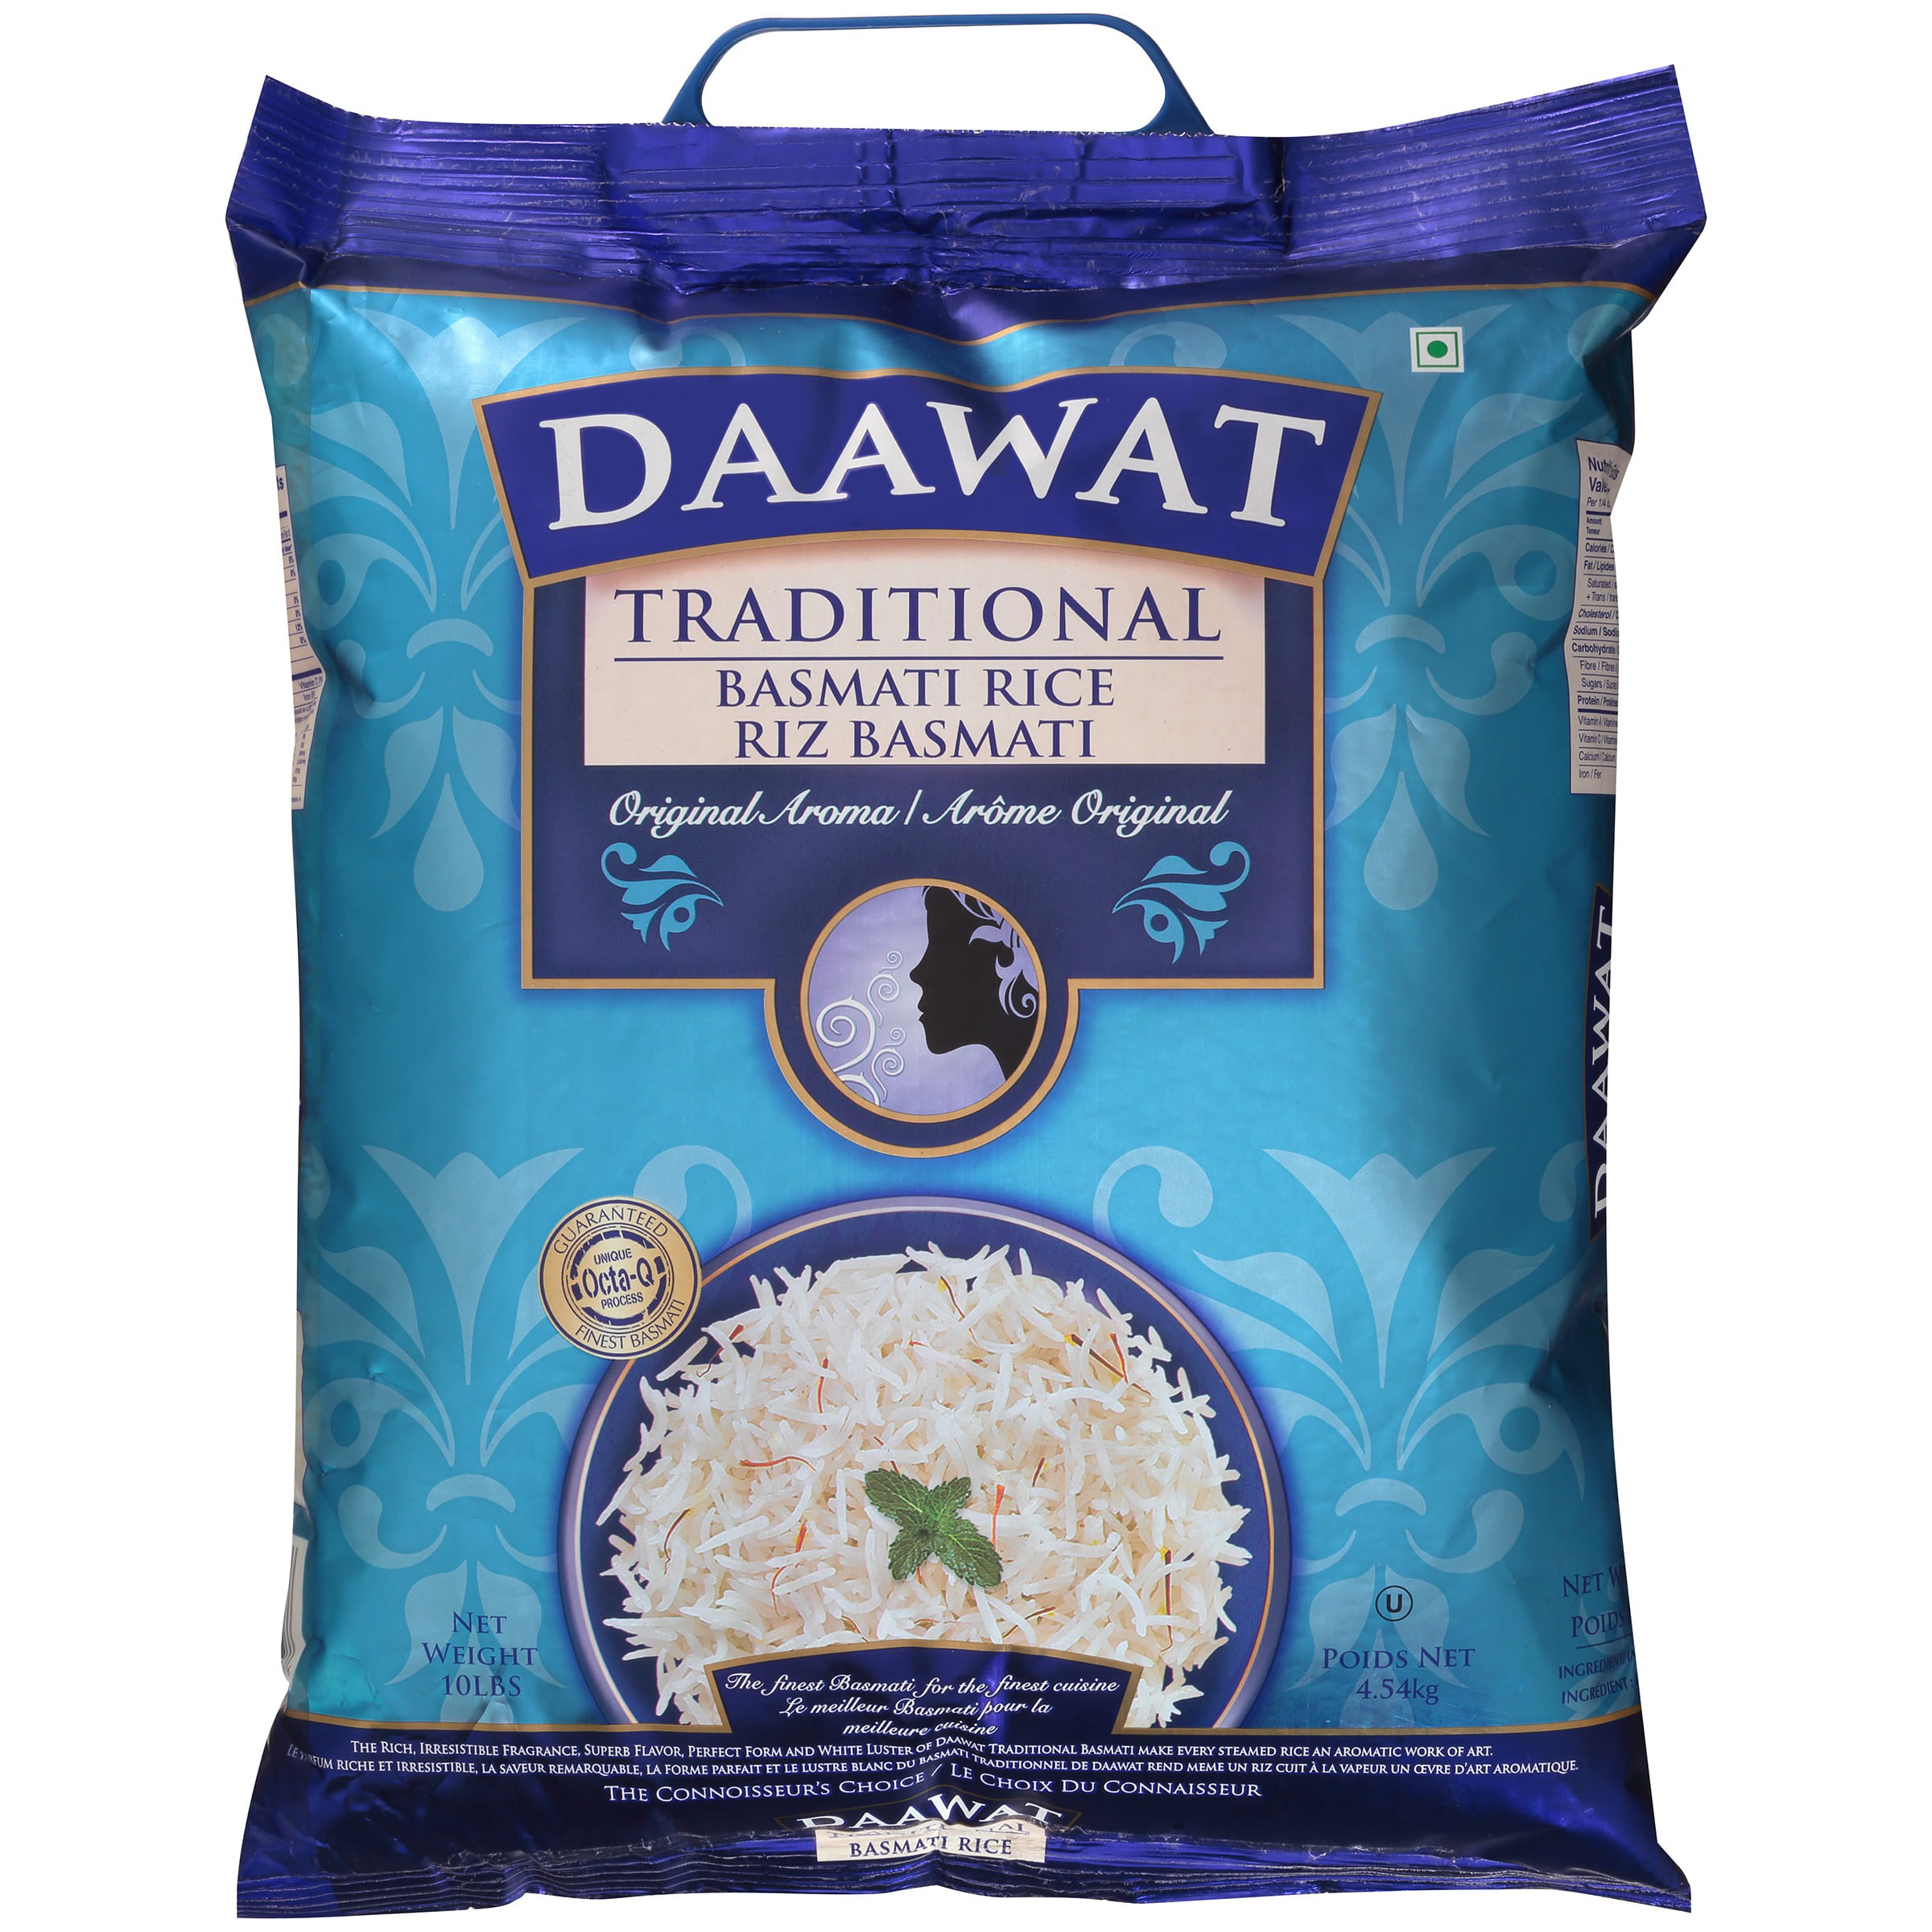 Rice 10. Рис басмати Daawat. Рис даават. Рис басмати Traditional 1 кг, Daawat. Daawat super Basmati рис купить.